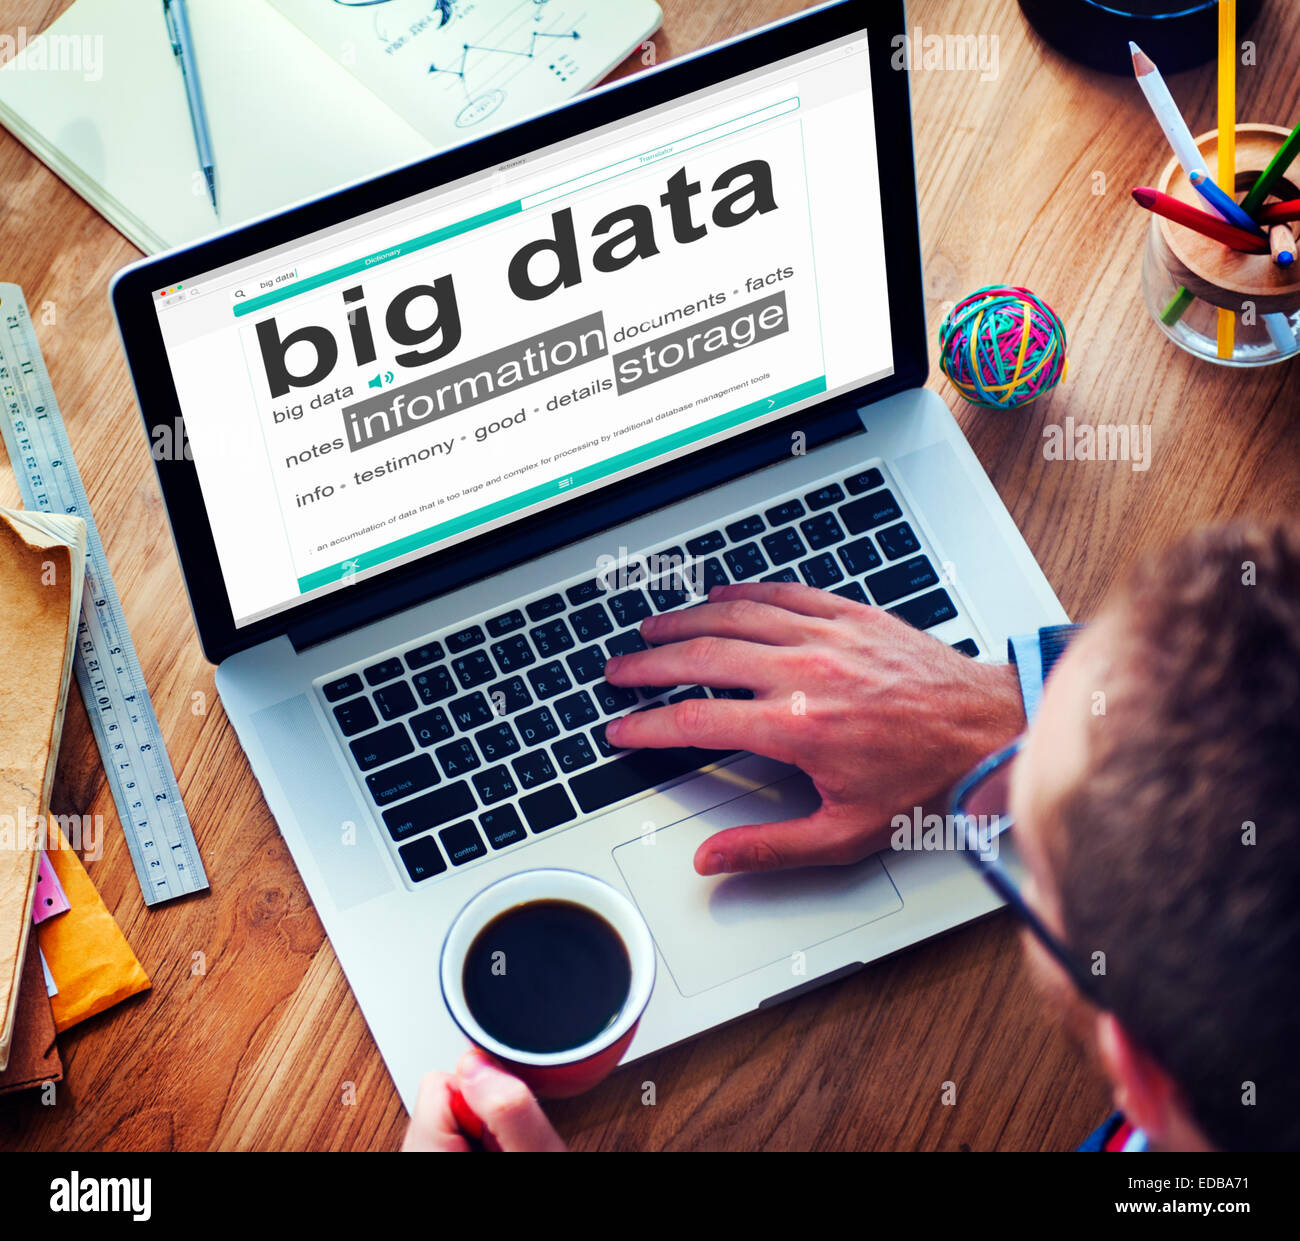 Digital Dictionary Big Data Information Storage Concept Stock Photo